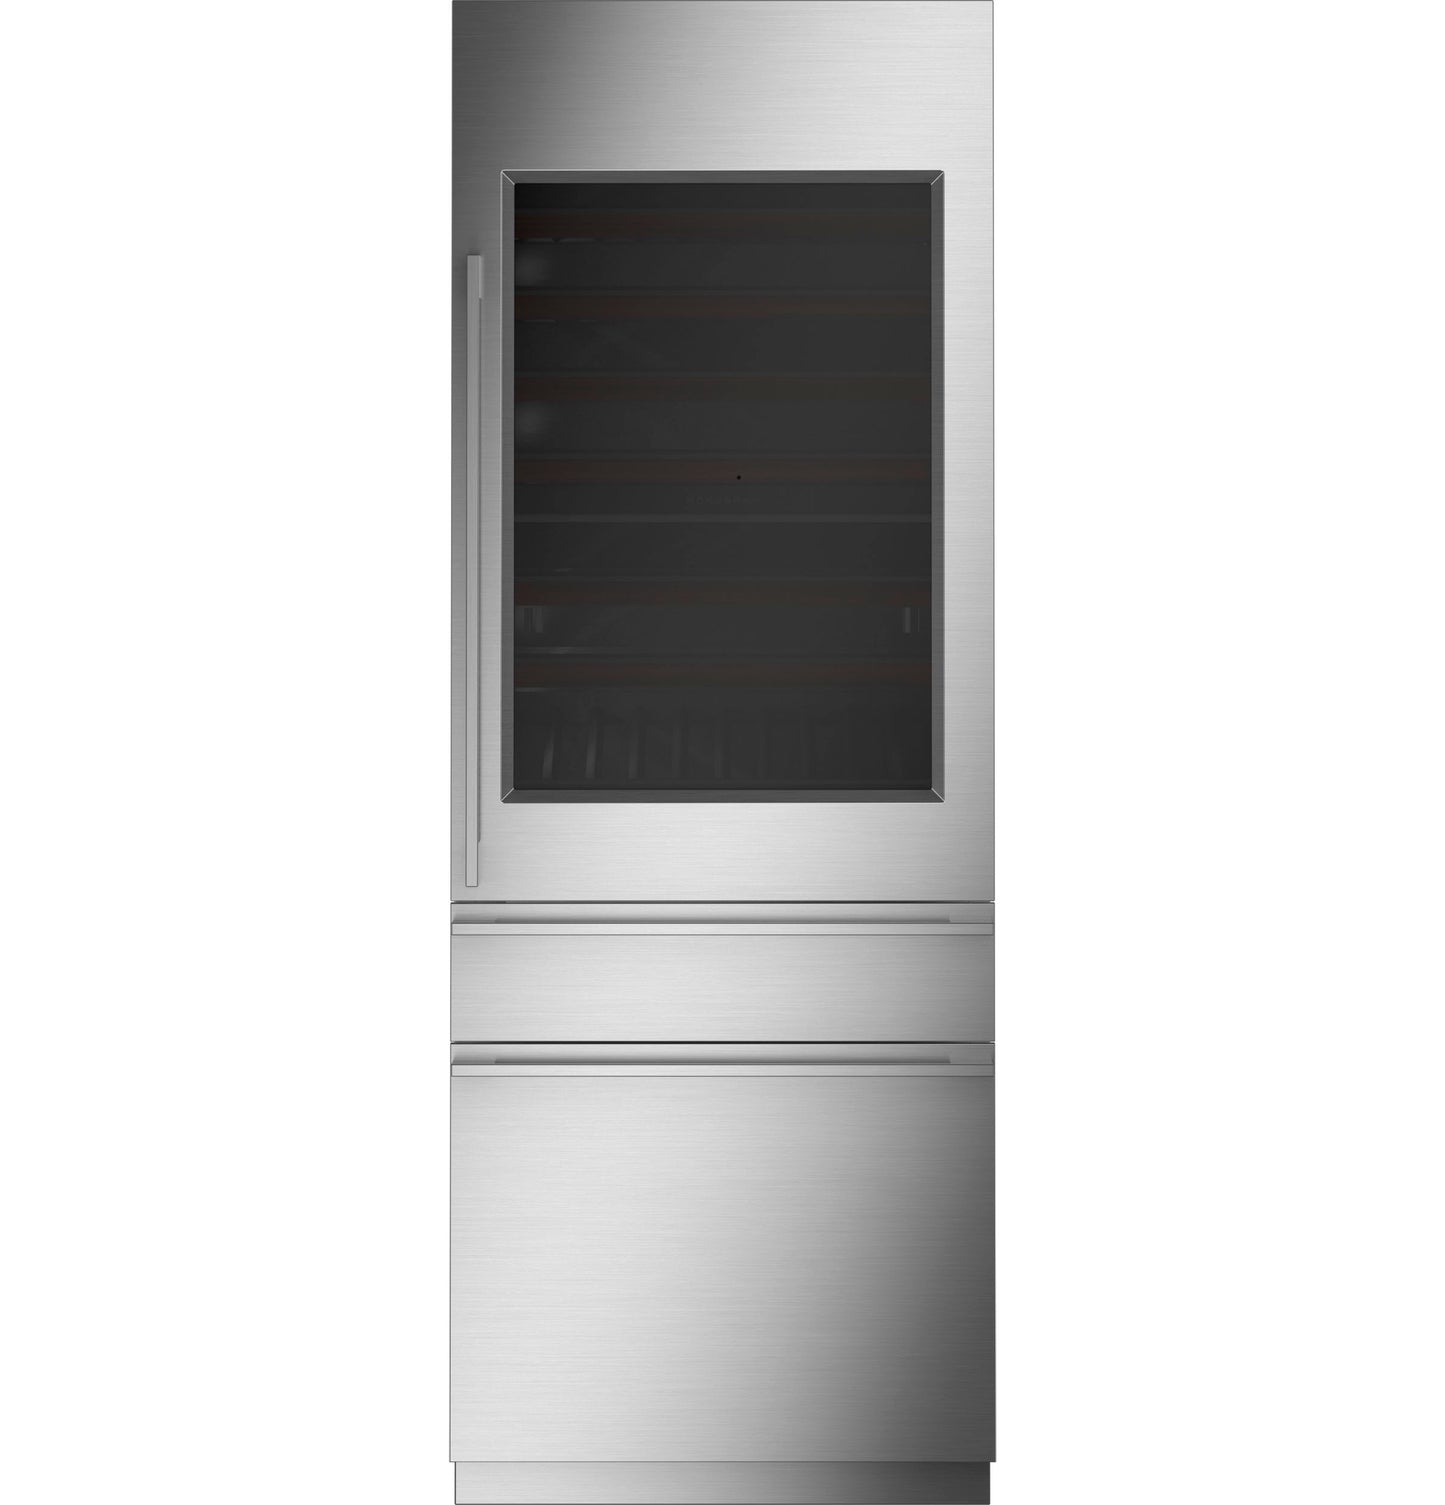 Monogram ZIW303NPPII Monogram 30" Fully Integrated Wine Refrigerator